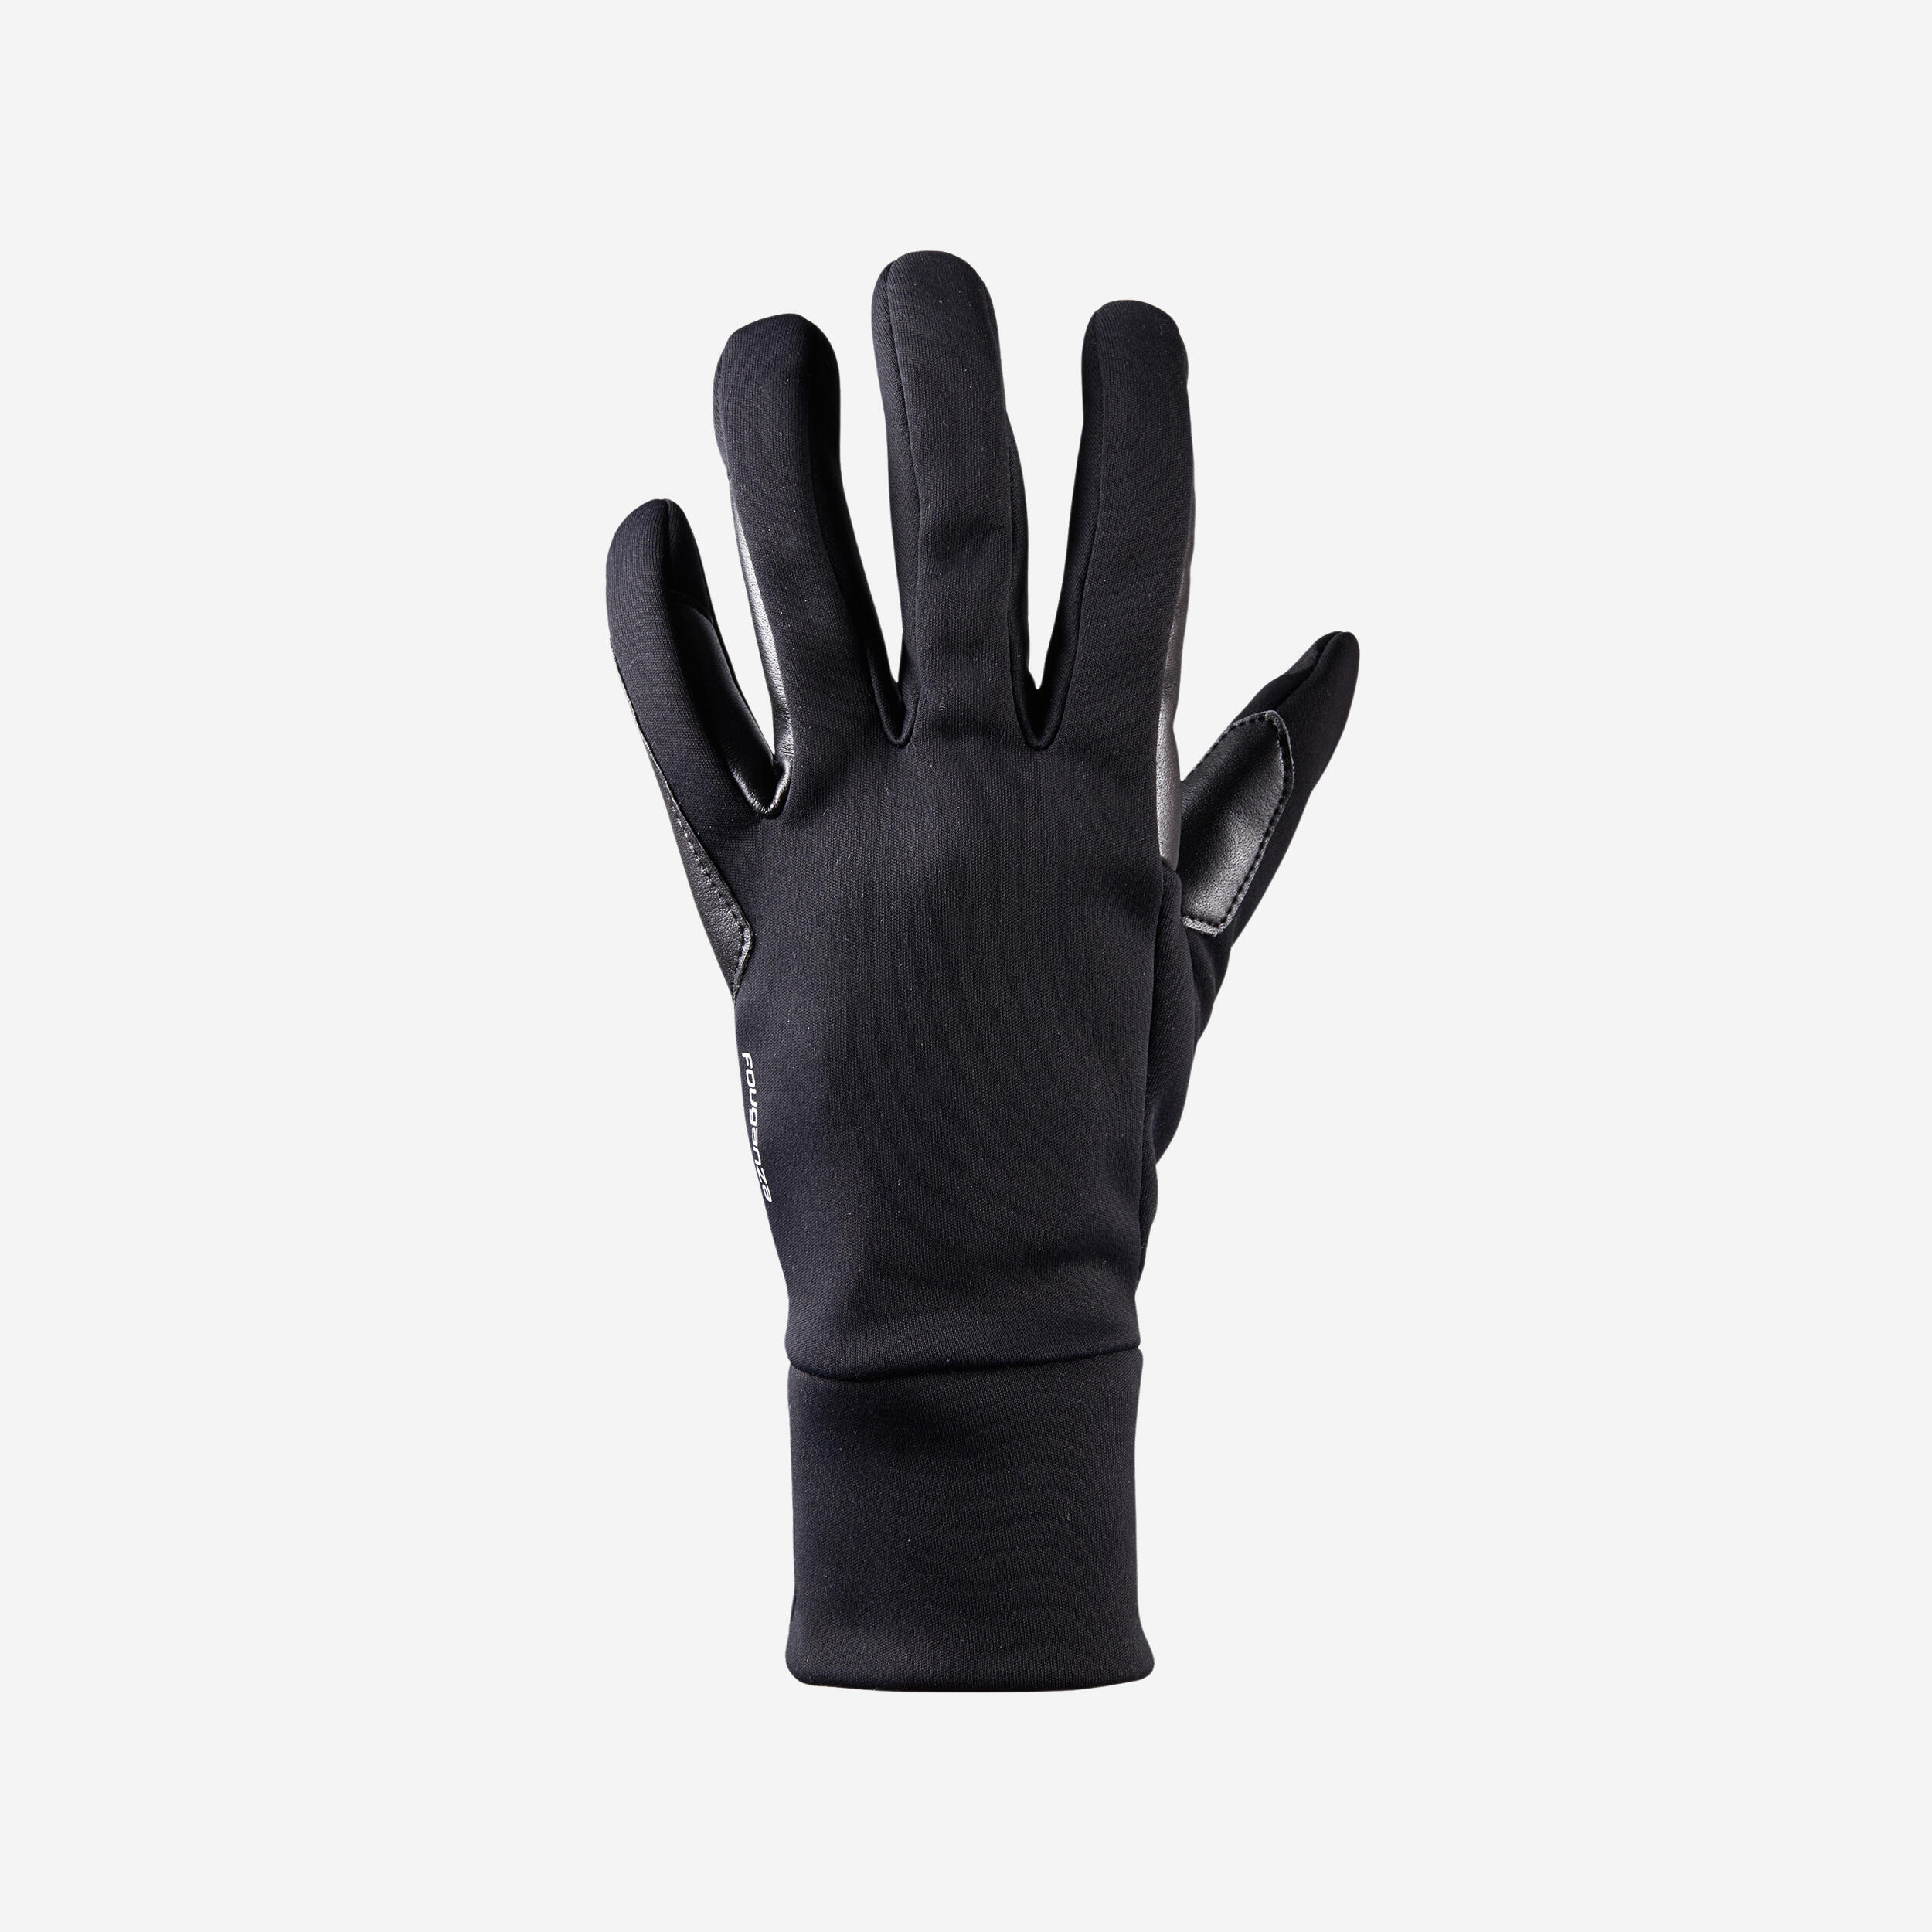 100 Women's Horse Riding Gloves - Black 